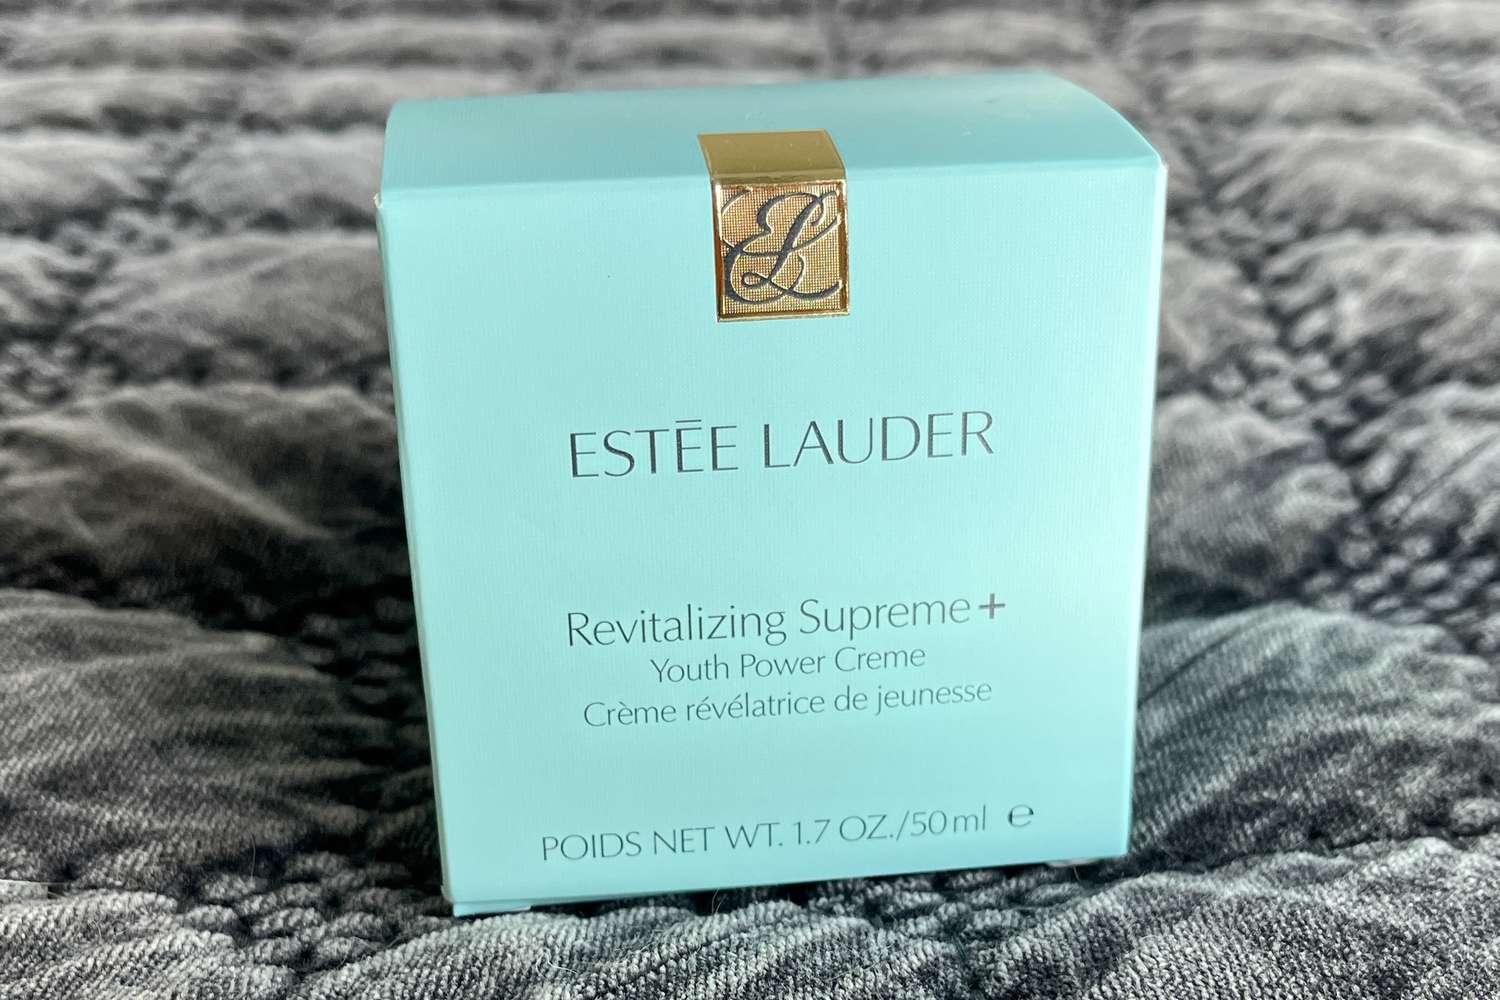 The Estee Lauder Revitalizing Supreme+ Moisturizer Youth Power Creme box